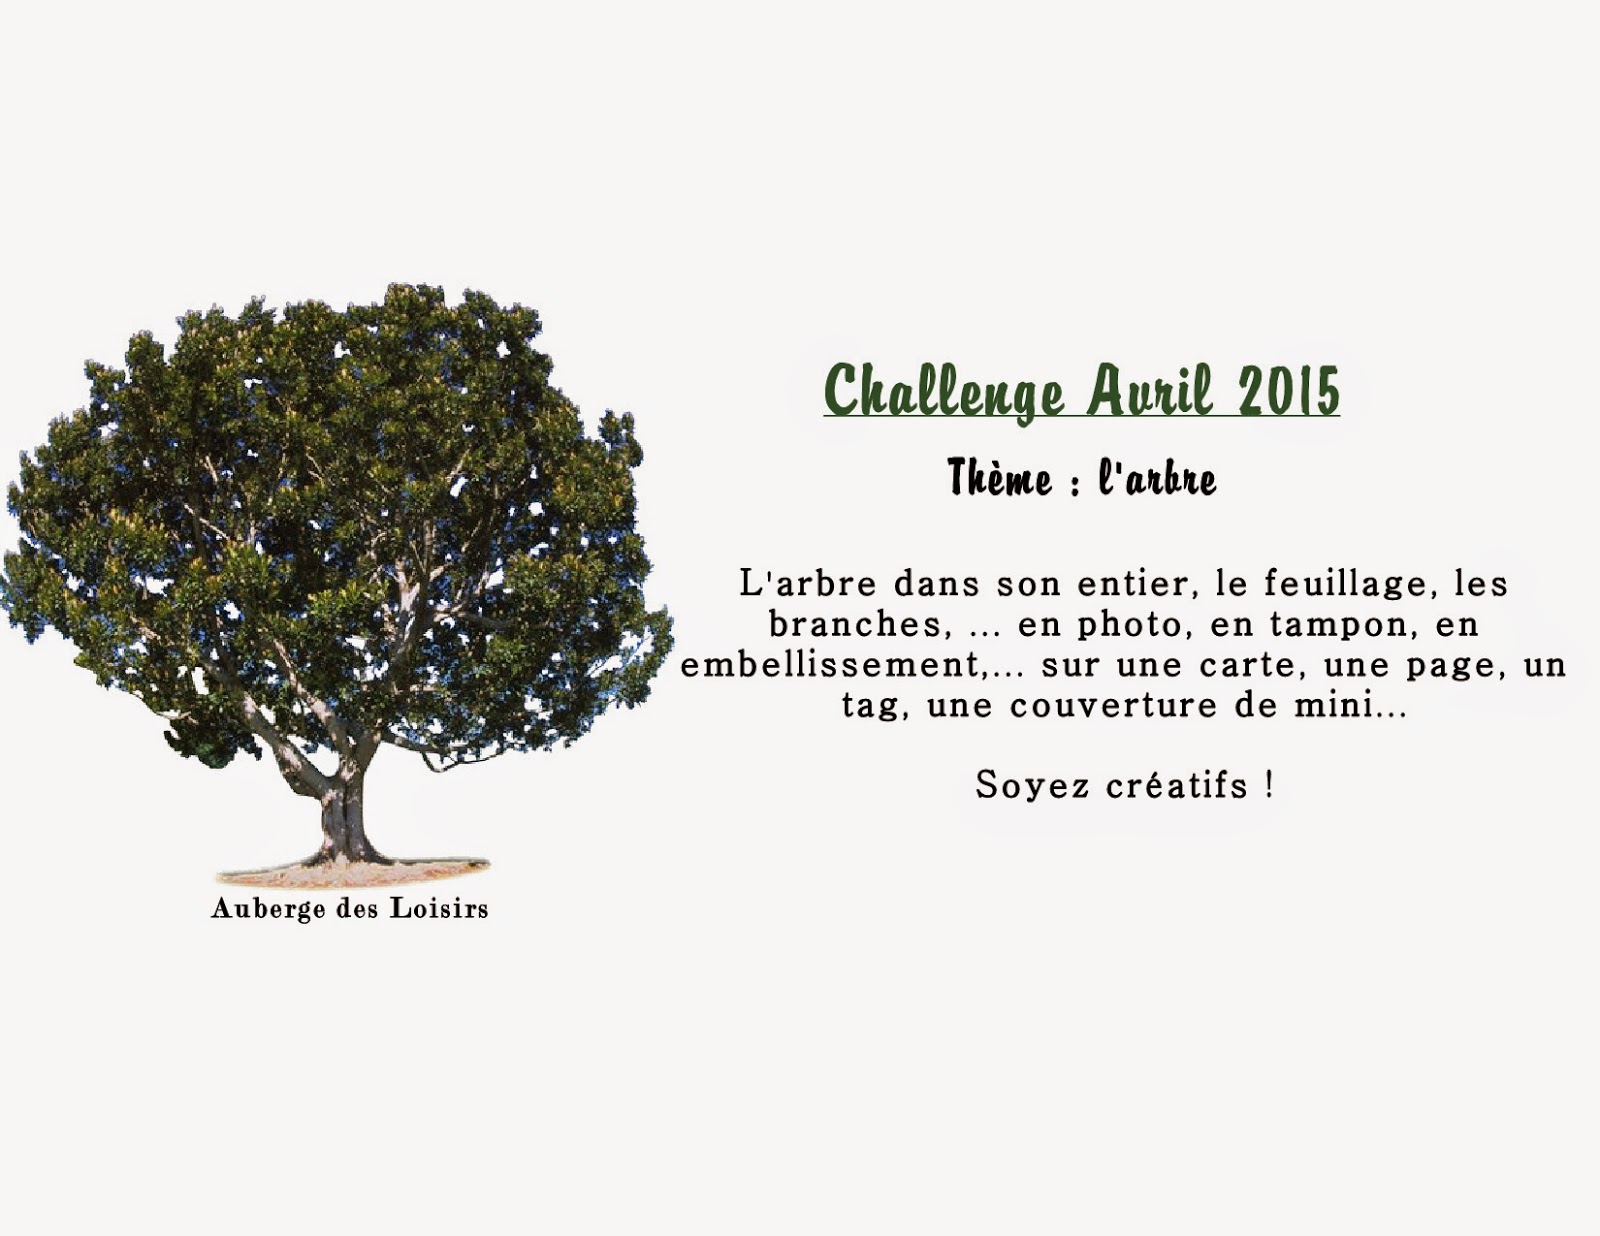 http://www.aubergedesloisirs.blogspot.fr/2015/04/challenge-avril-2015.html